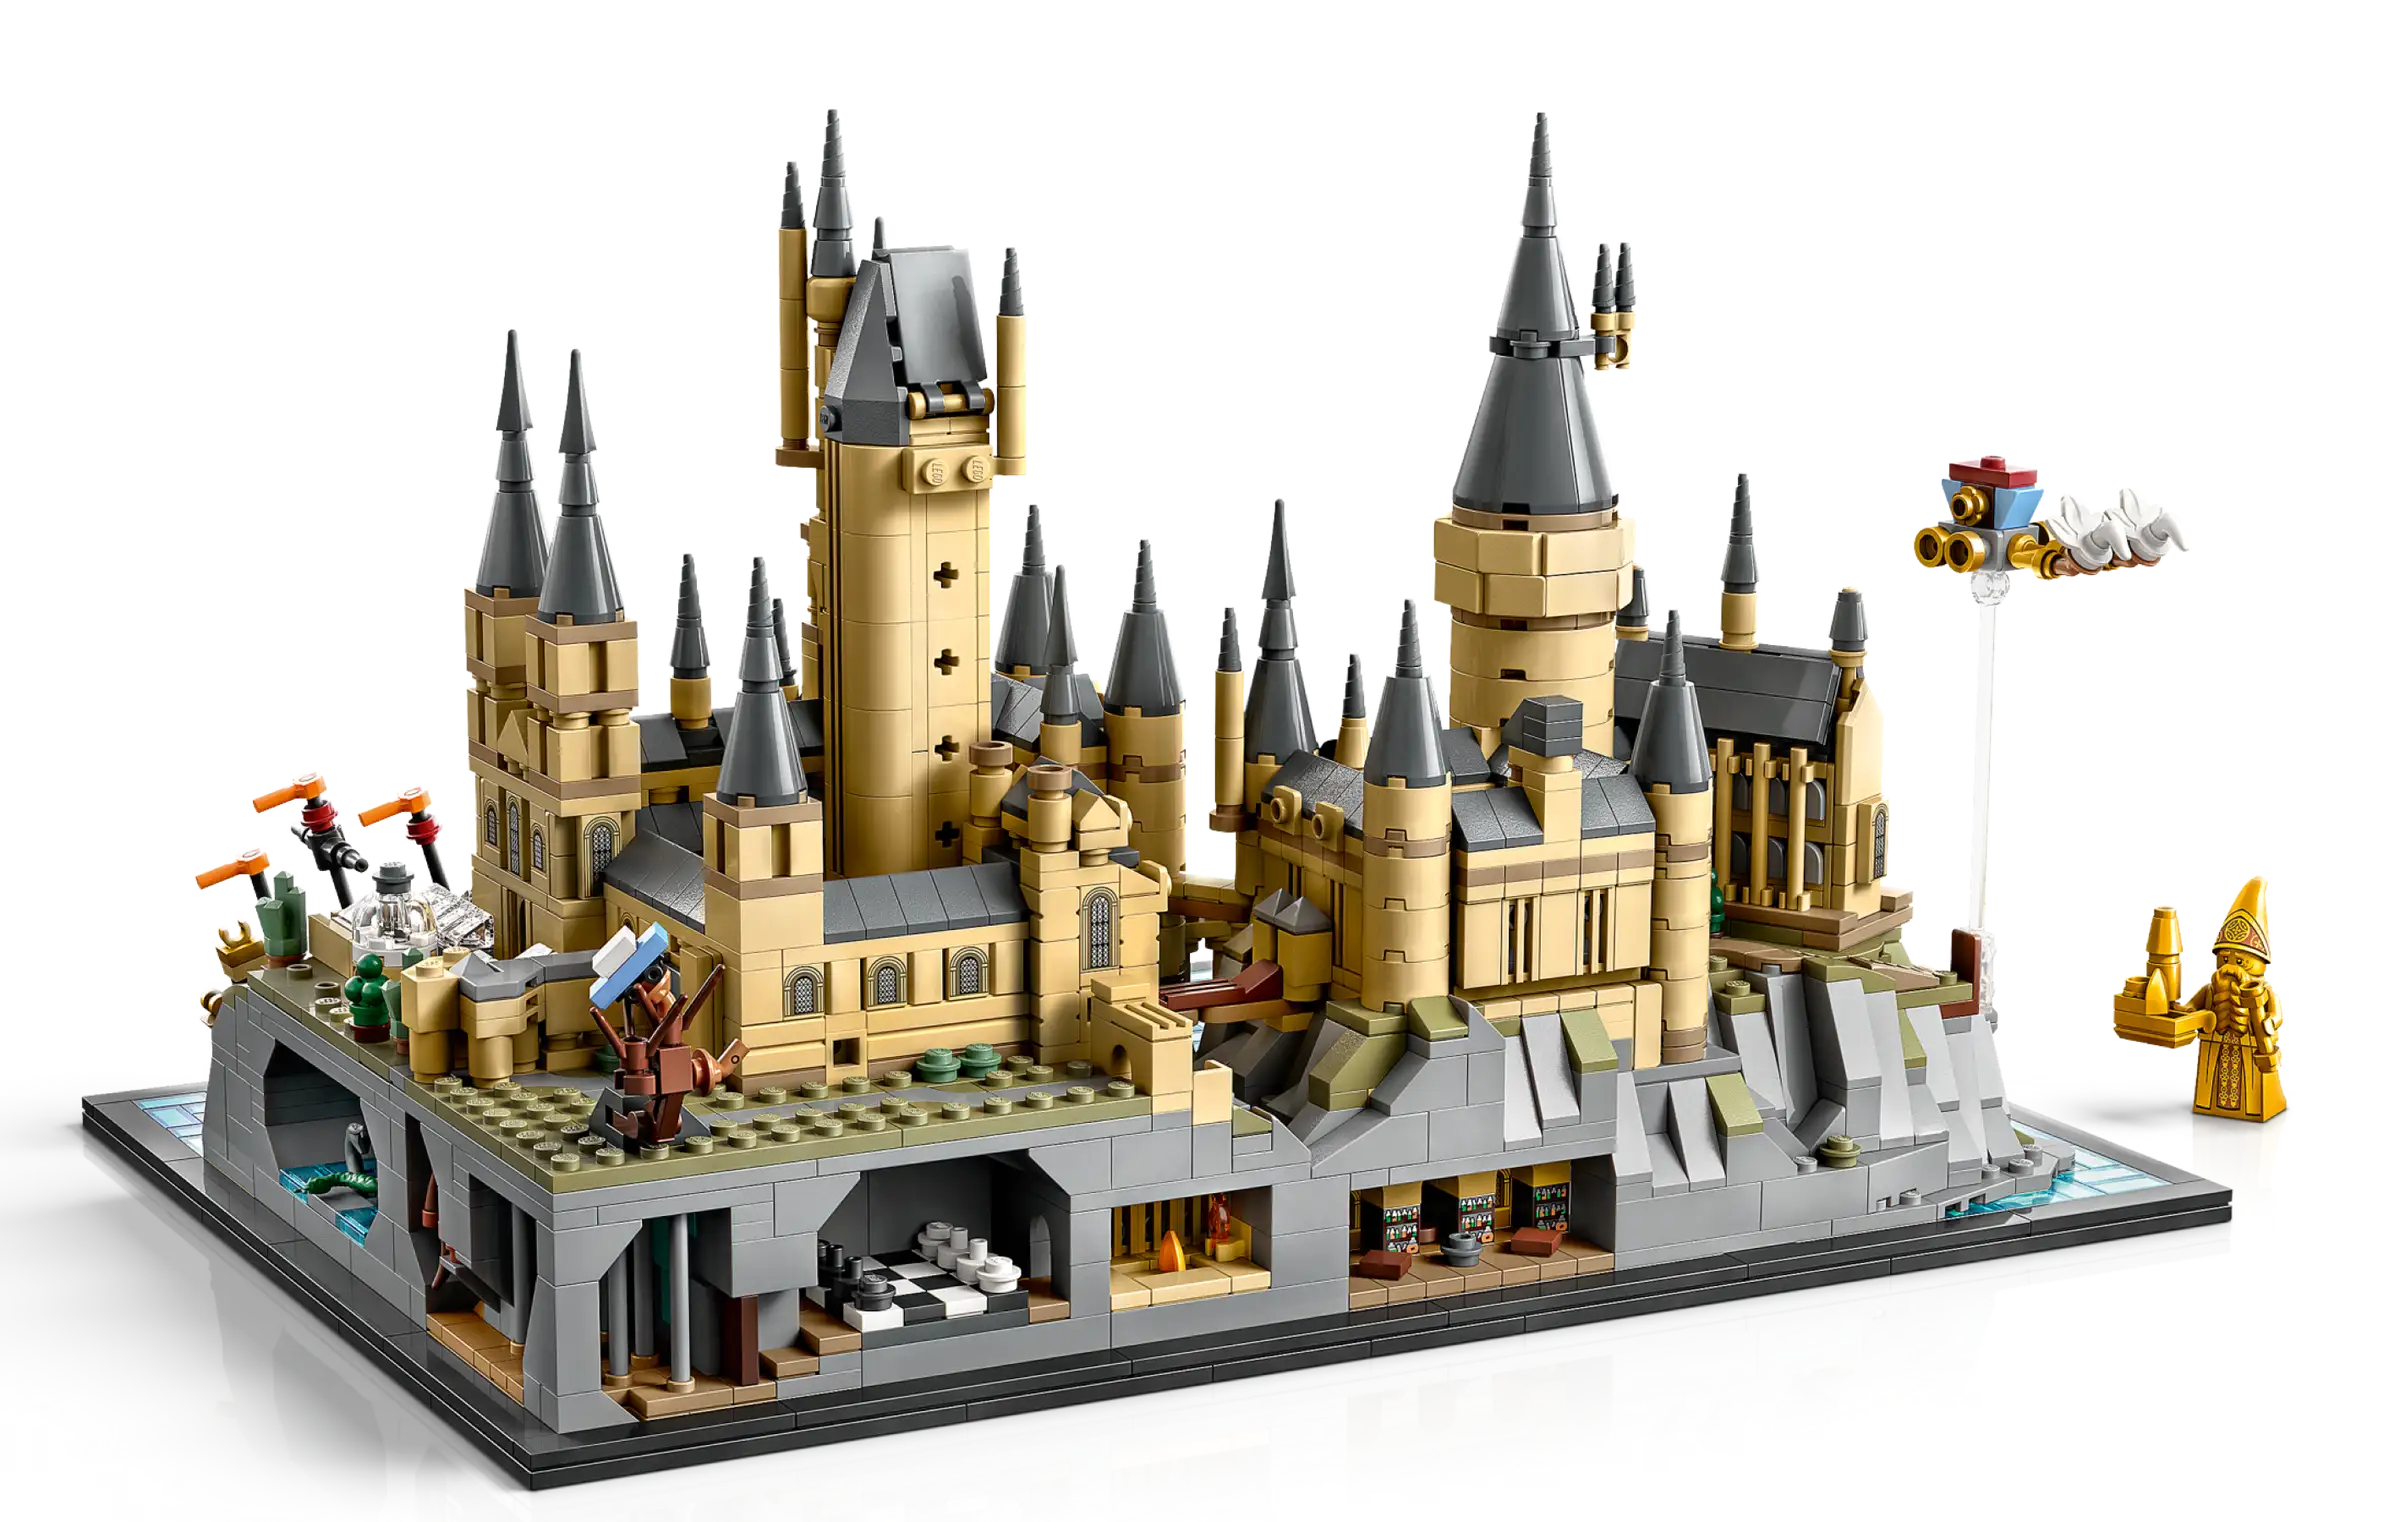 LEGO Harry Potter Archives - The Brick Fan